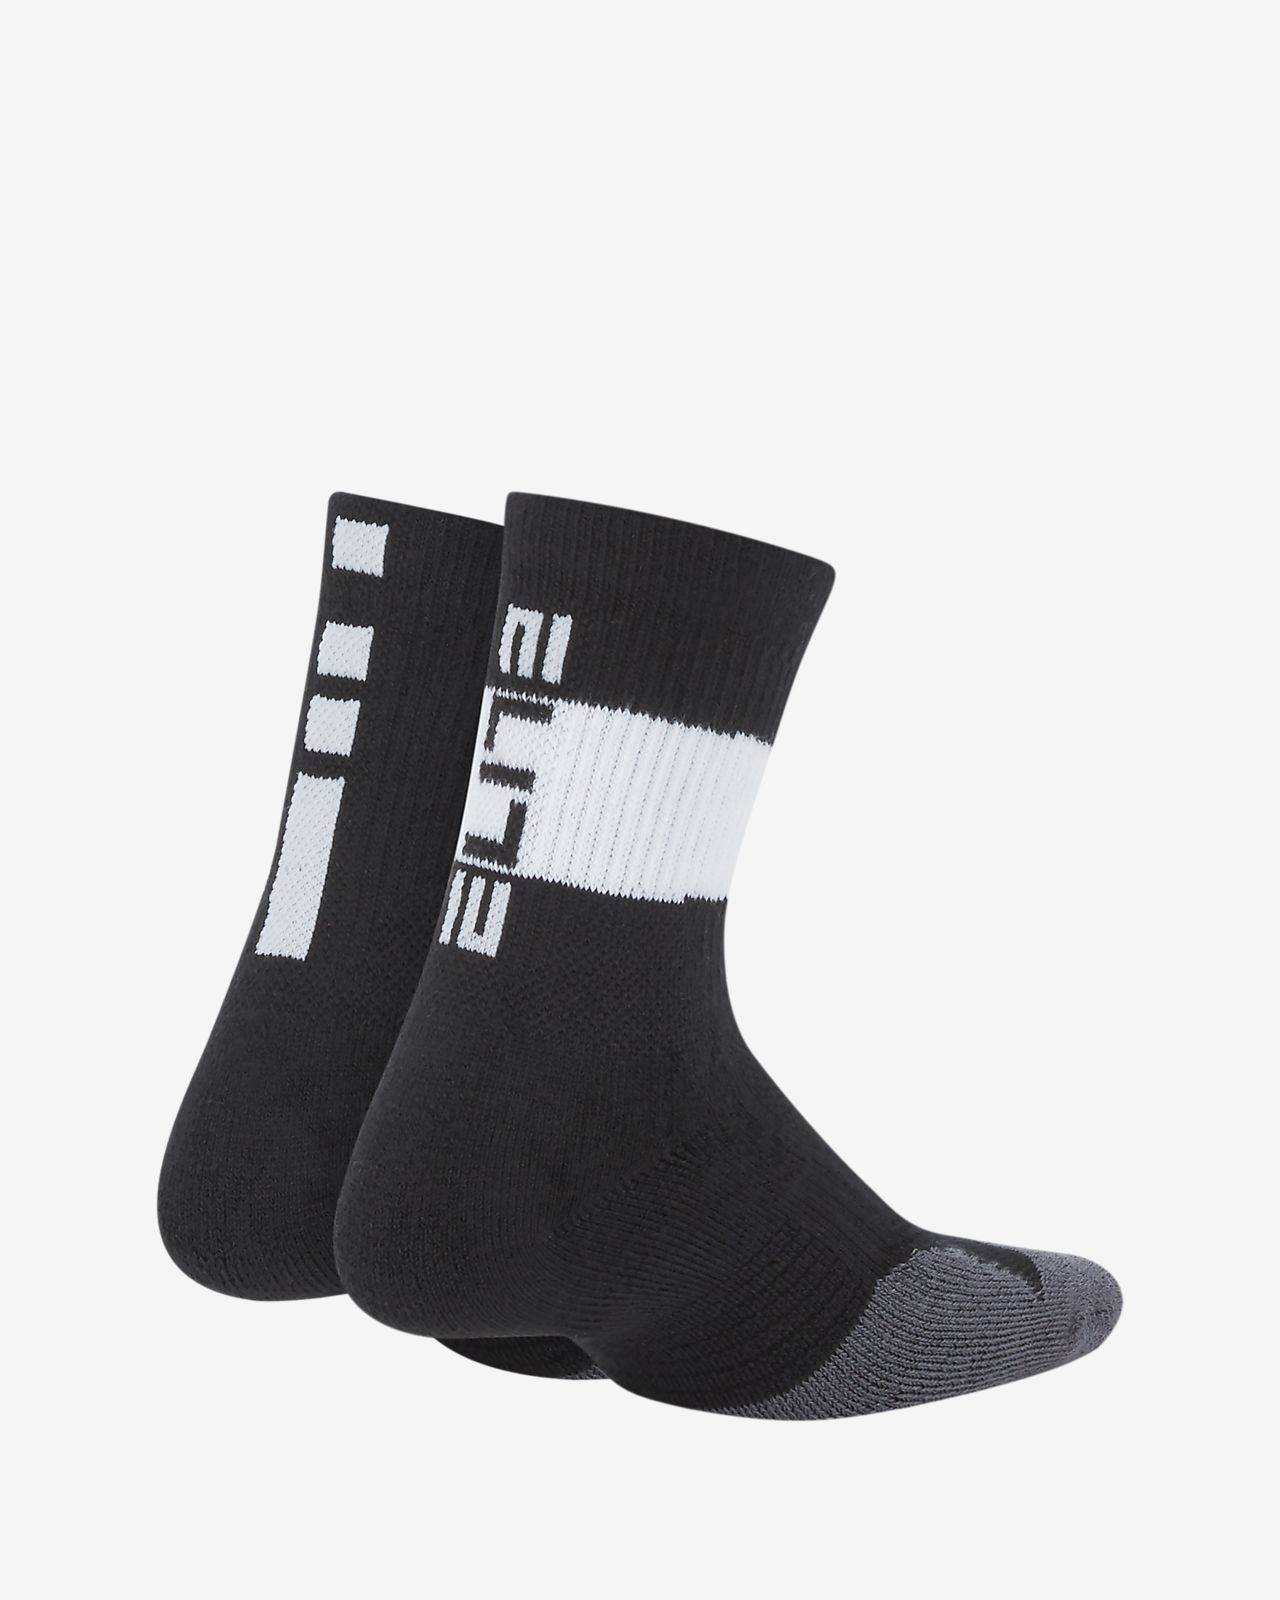 Nike Elite Little Kids' Crew Socks (2 Pairs). Nike.com